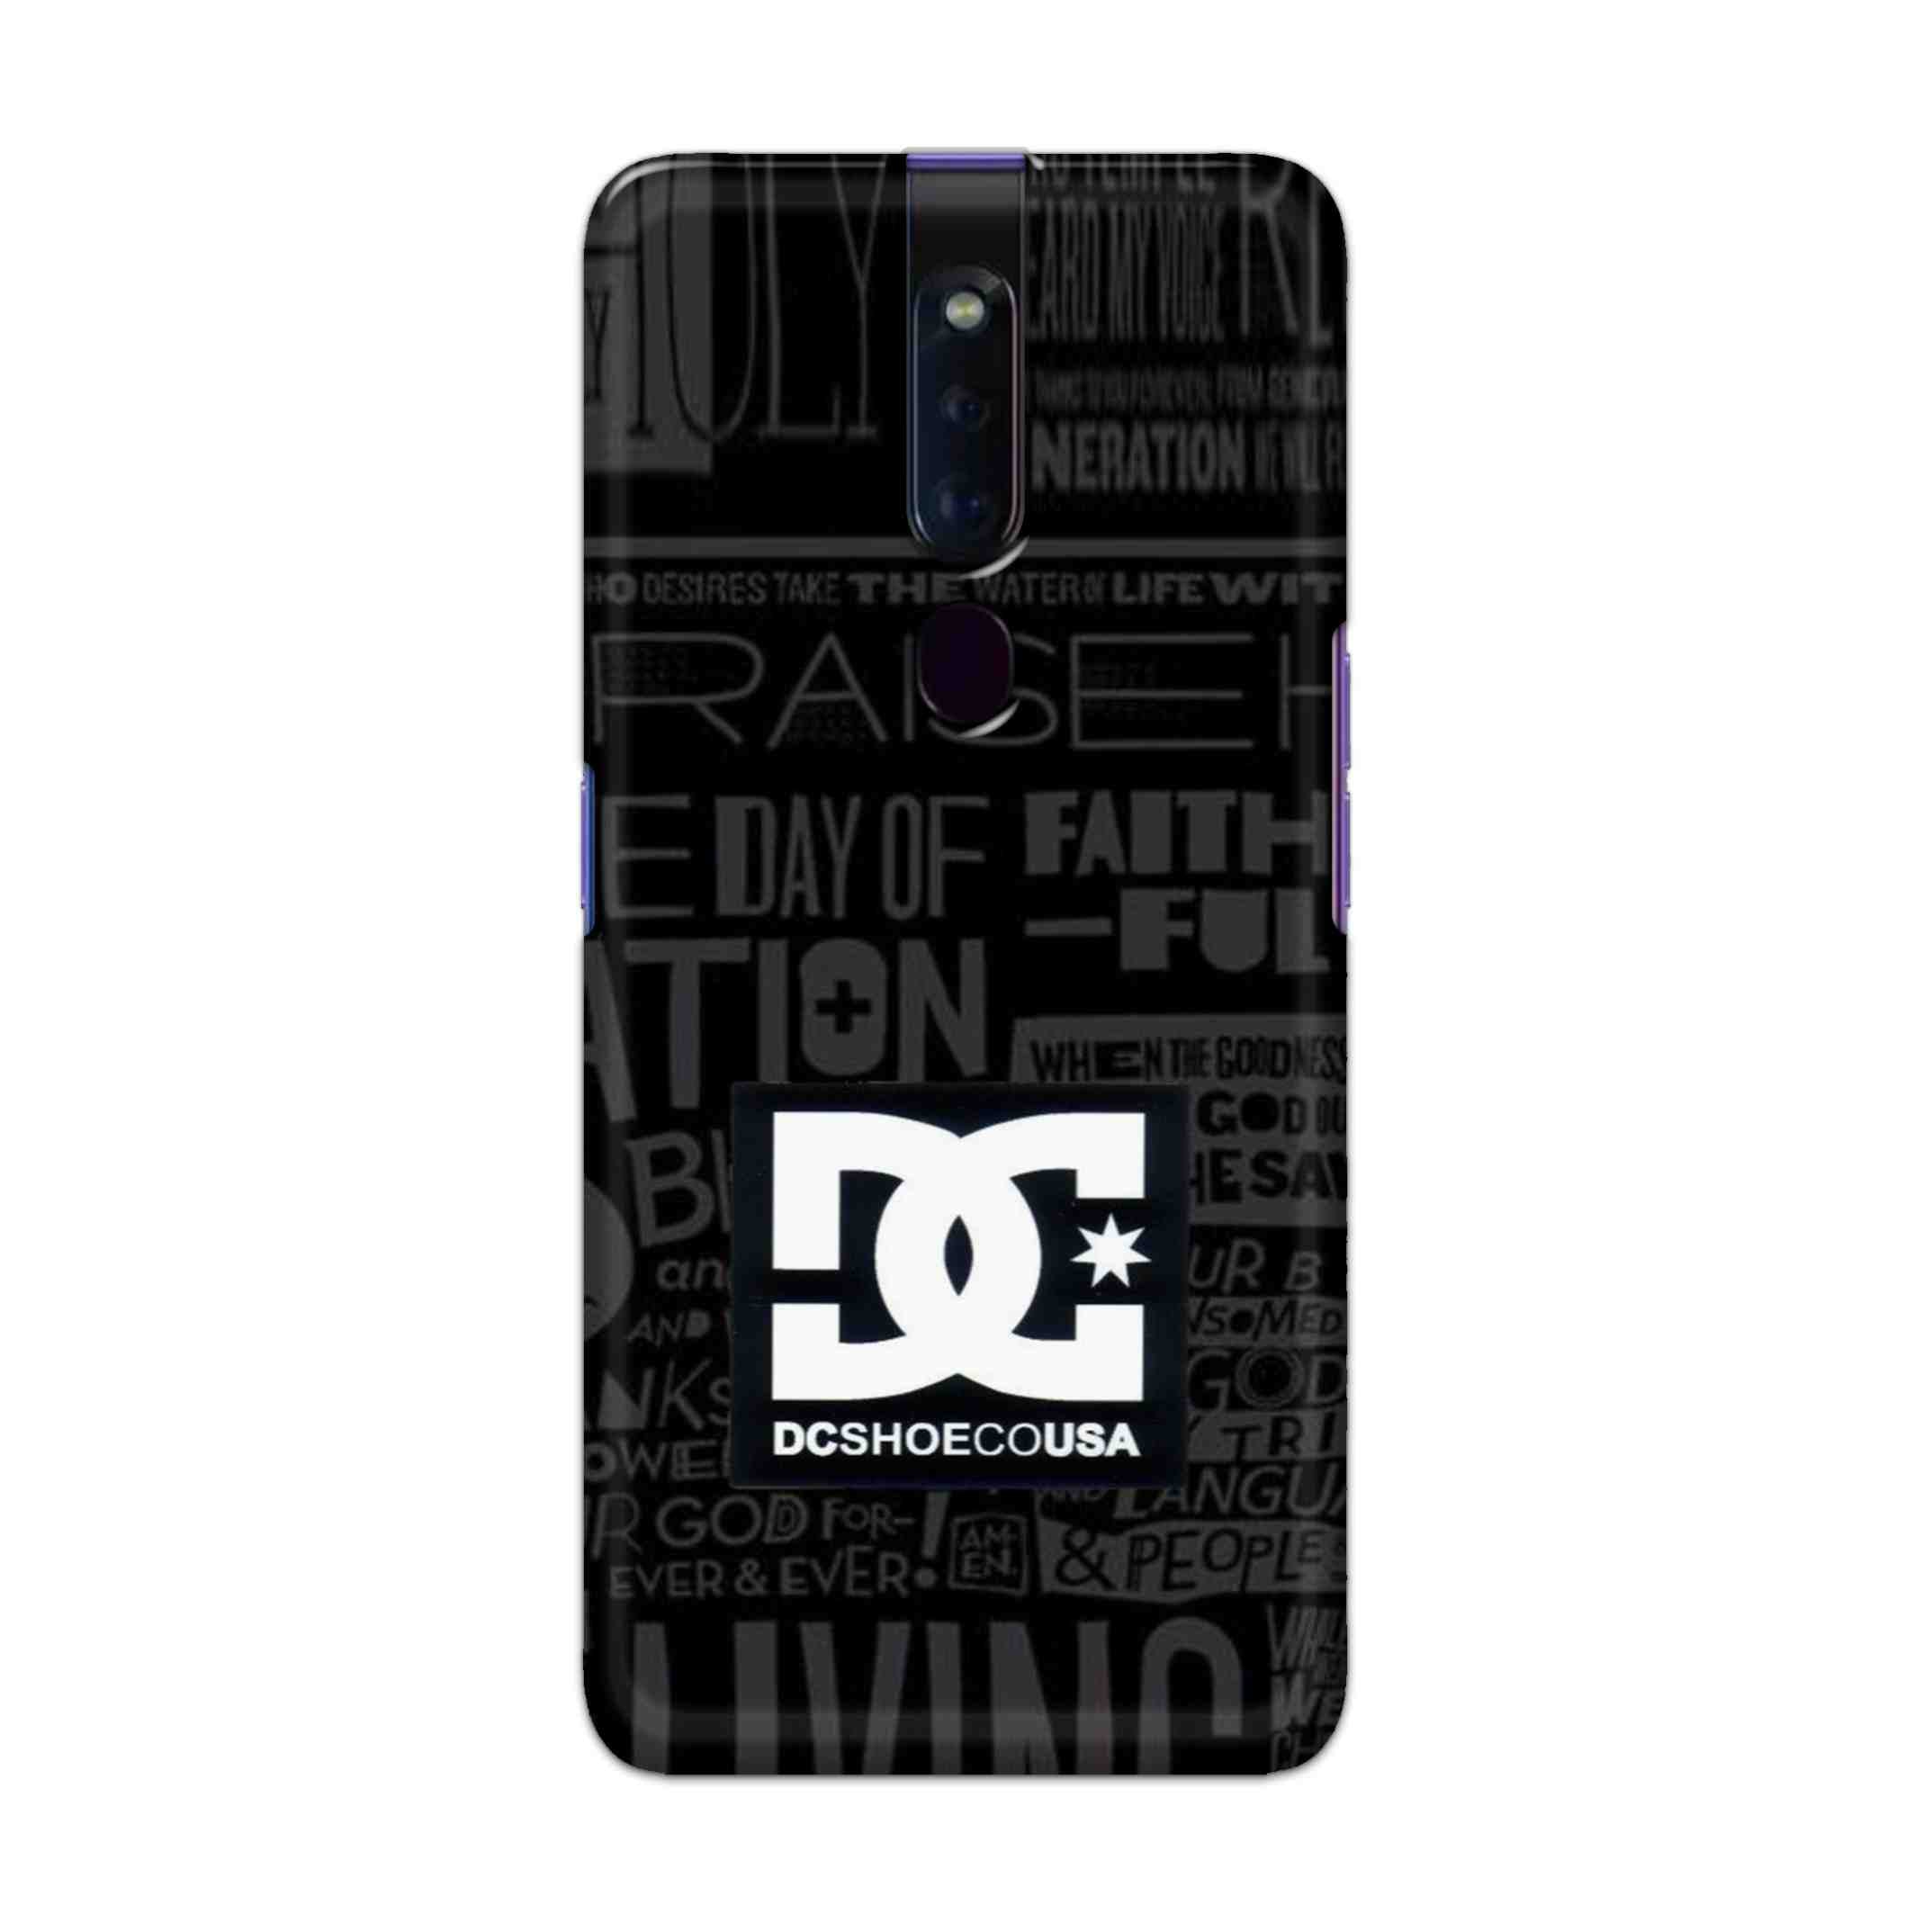 Buy Dc Shoecousa Hard Back Mobile Phone Case Cover For Oppo F11 Pro Online